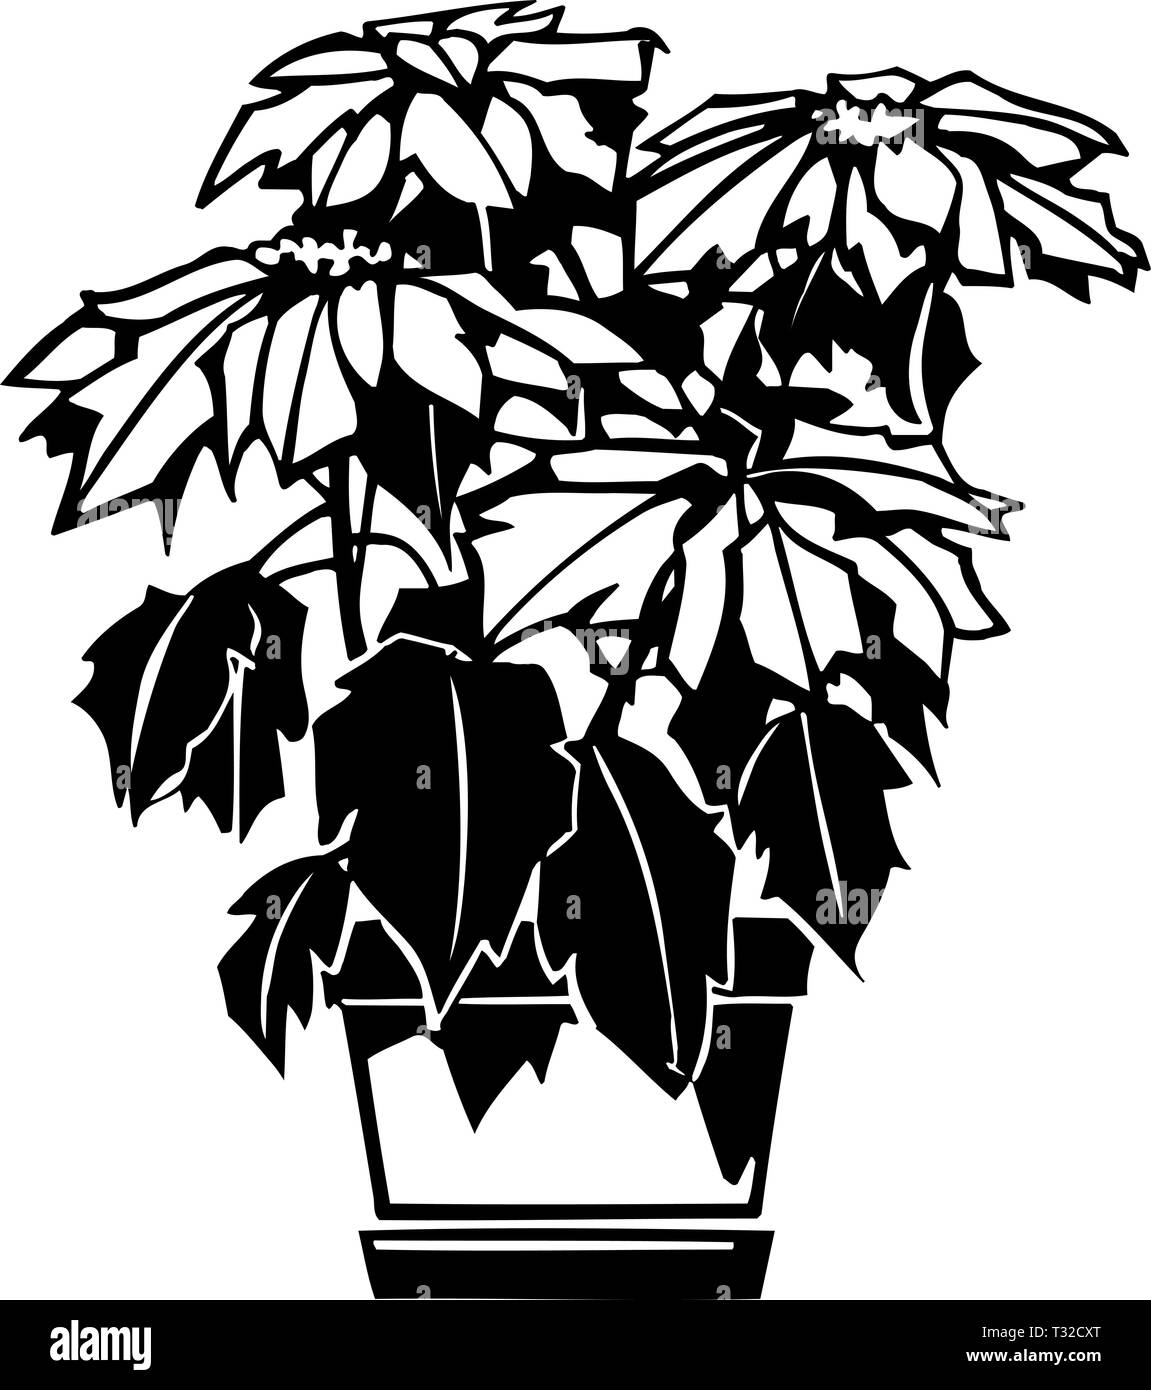 Poinsettia Plant Illustration Stock Vector